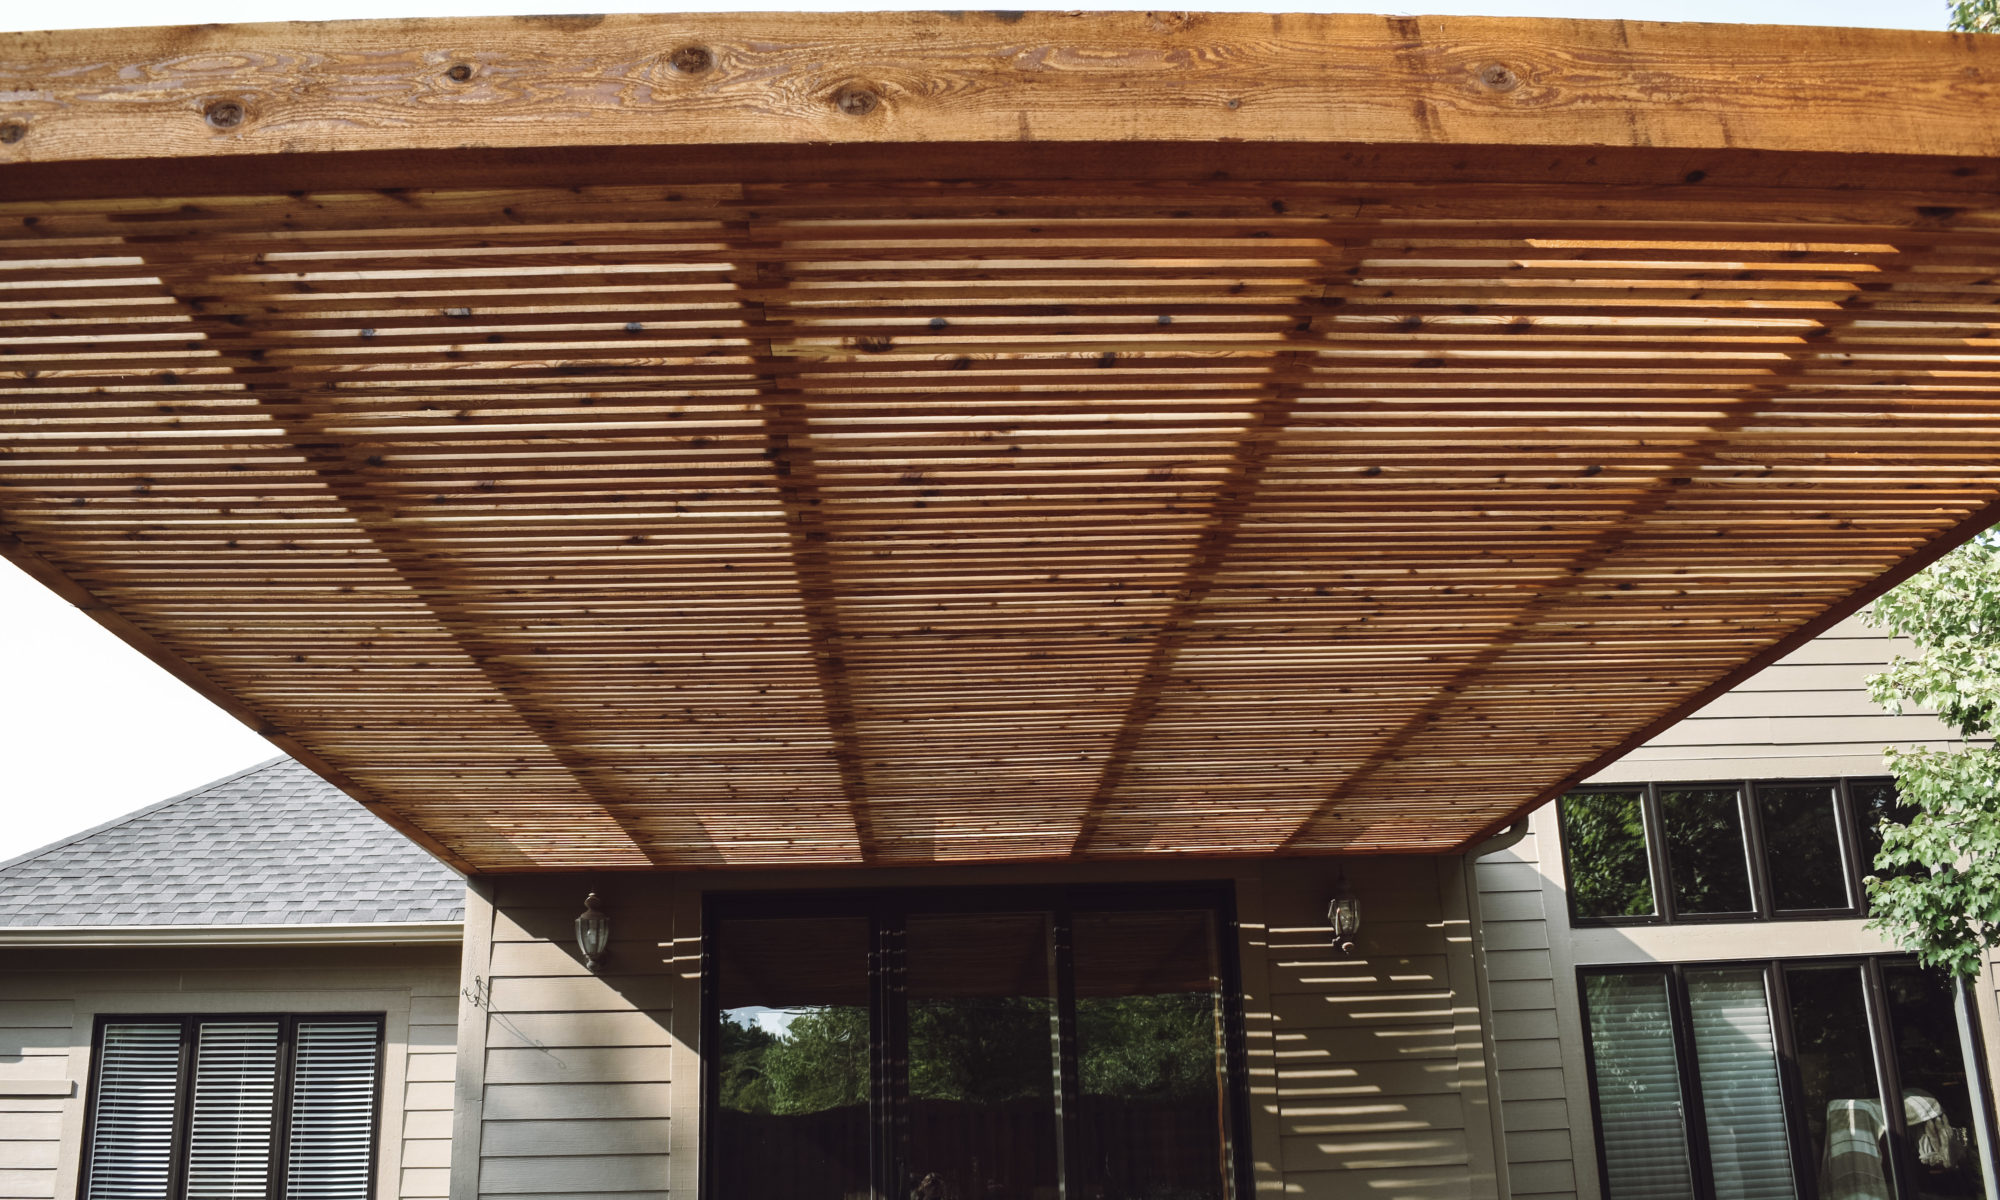 Precision Outdoors Geist Modern Pergola rough timber structures retaining wall Geist indiana beautiful backyard walkway